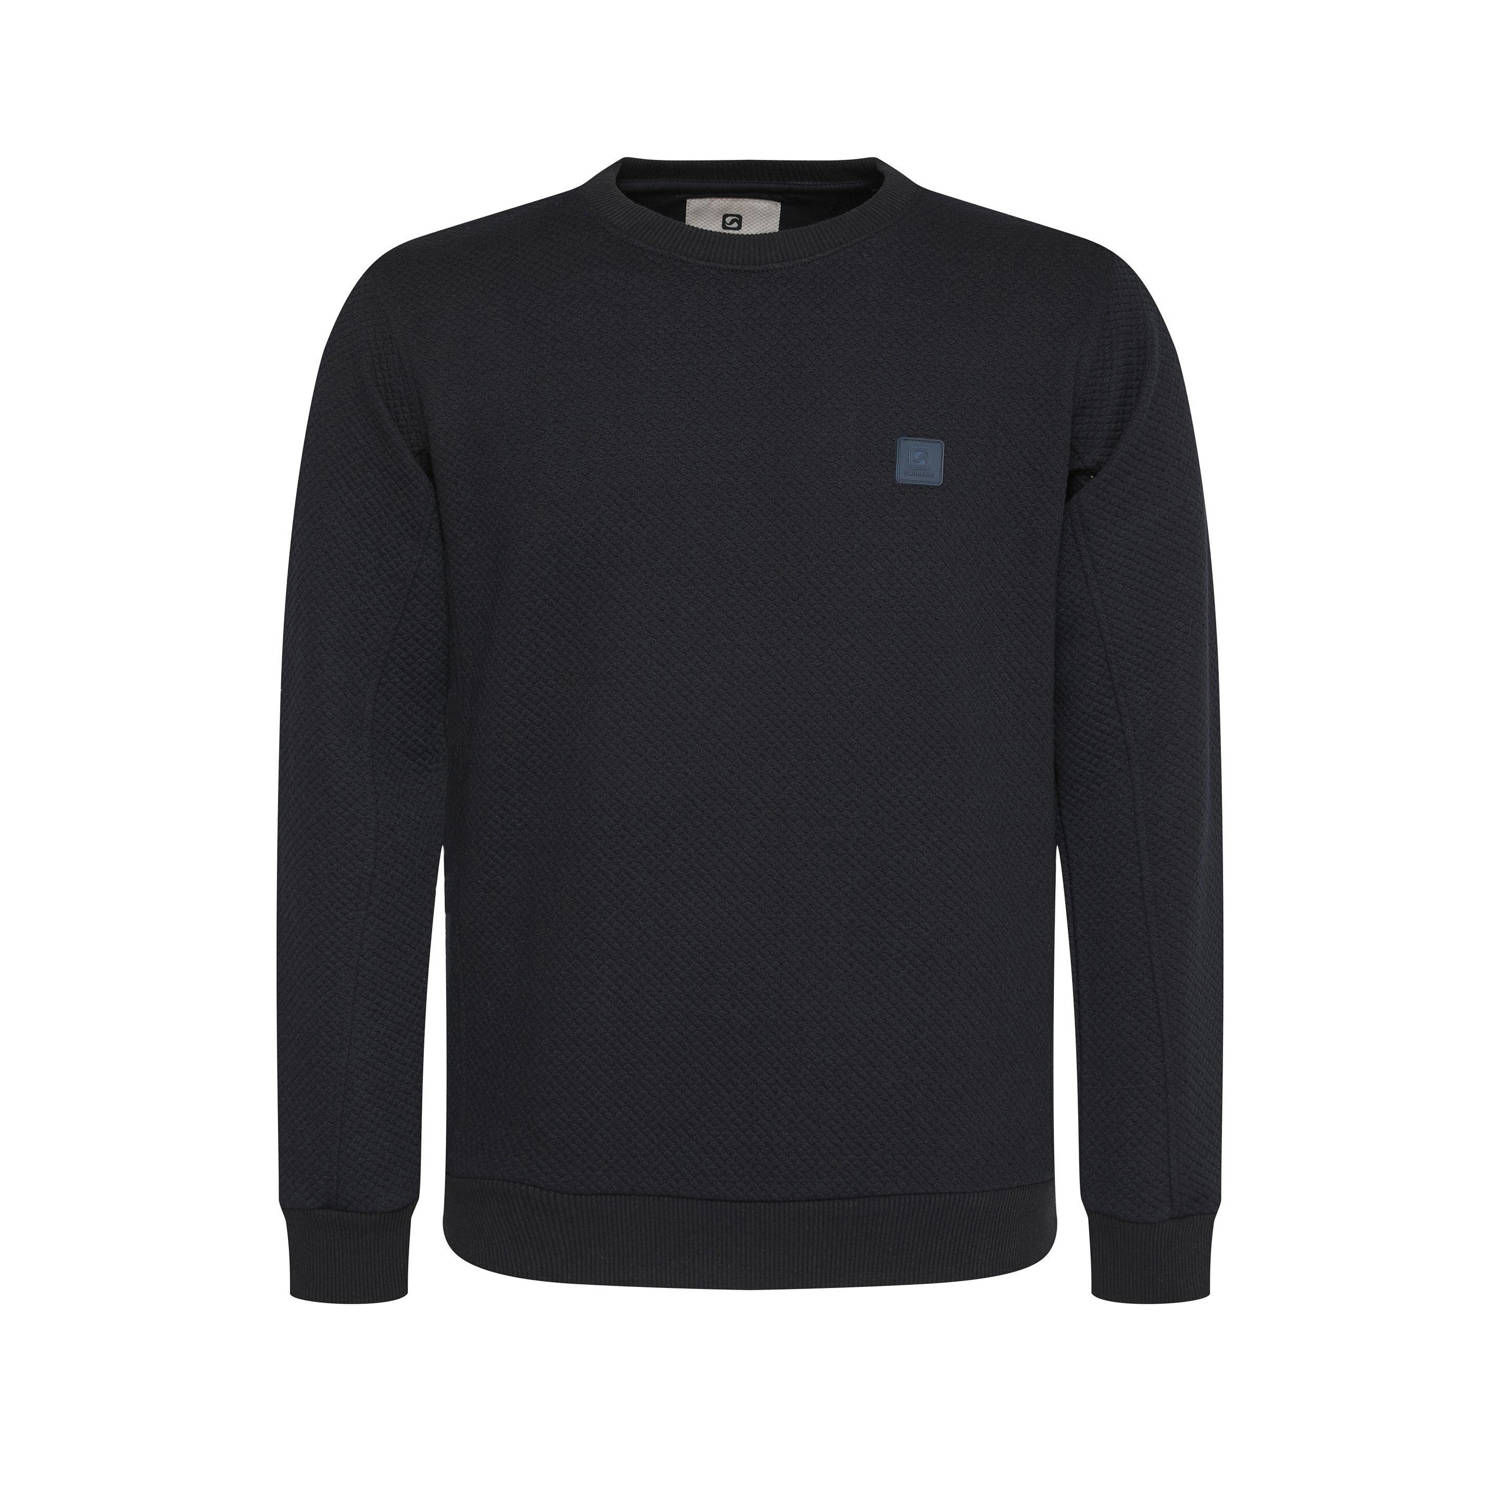 GABBIANO sweater met logo en textuur indigo